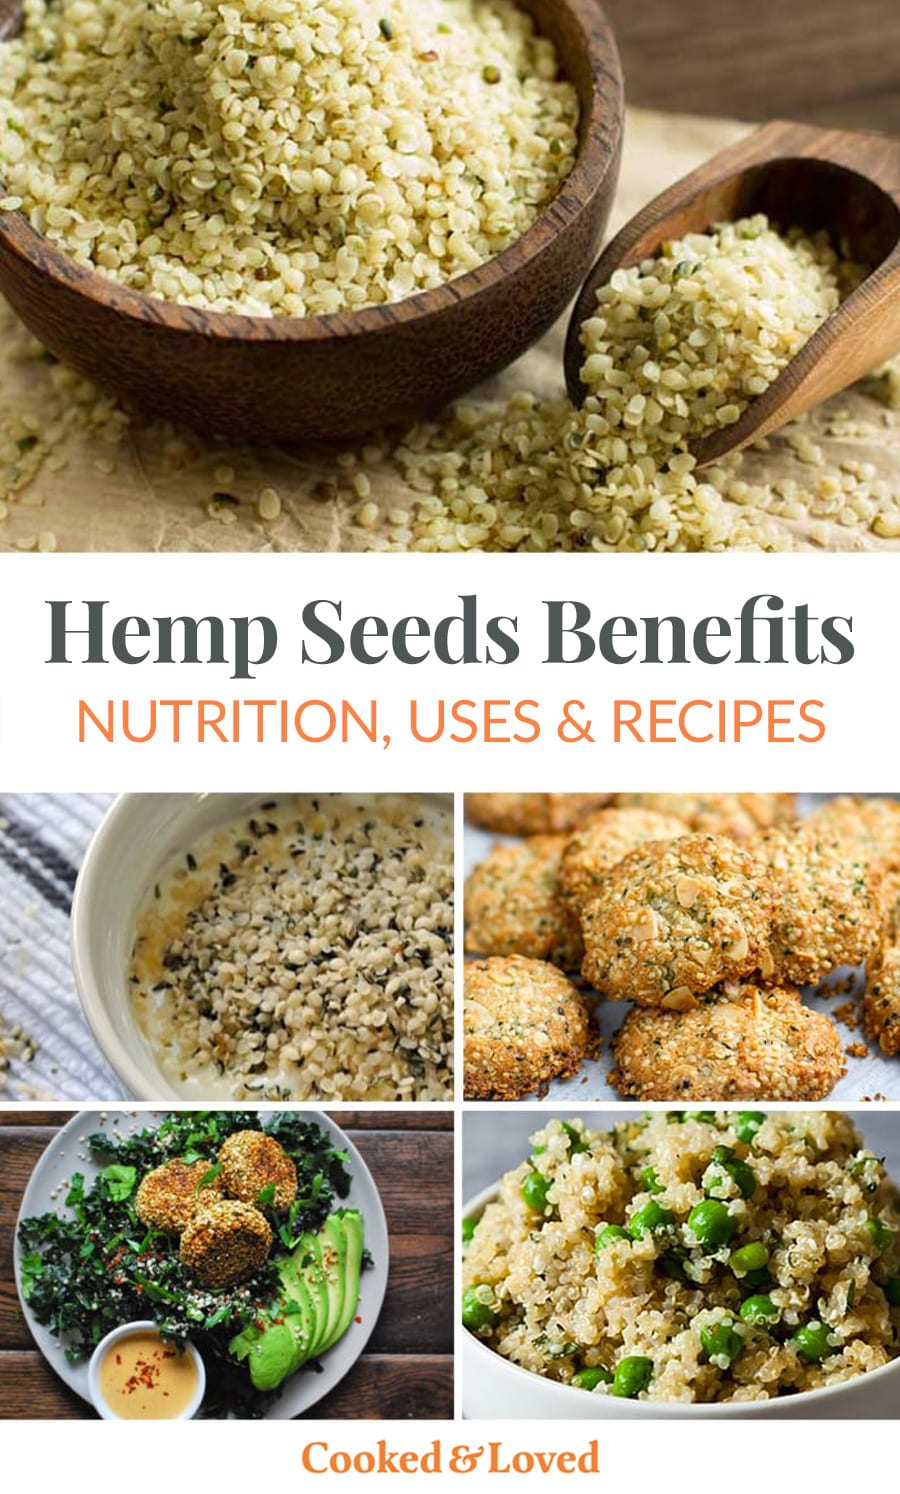 Hemp Seed Benefits, Nutrition, Uses & Recipes